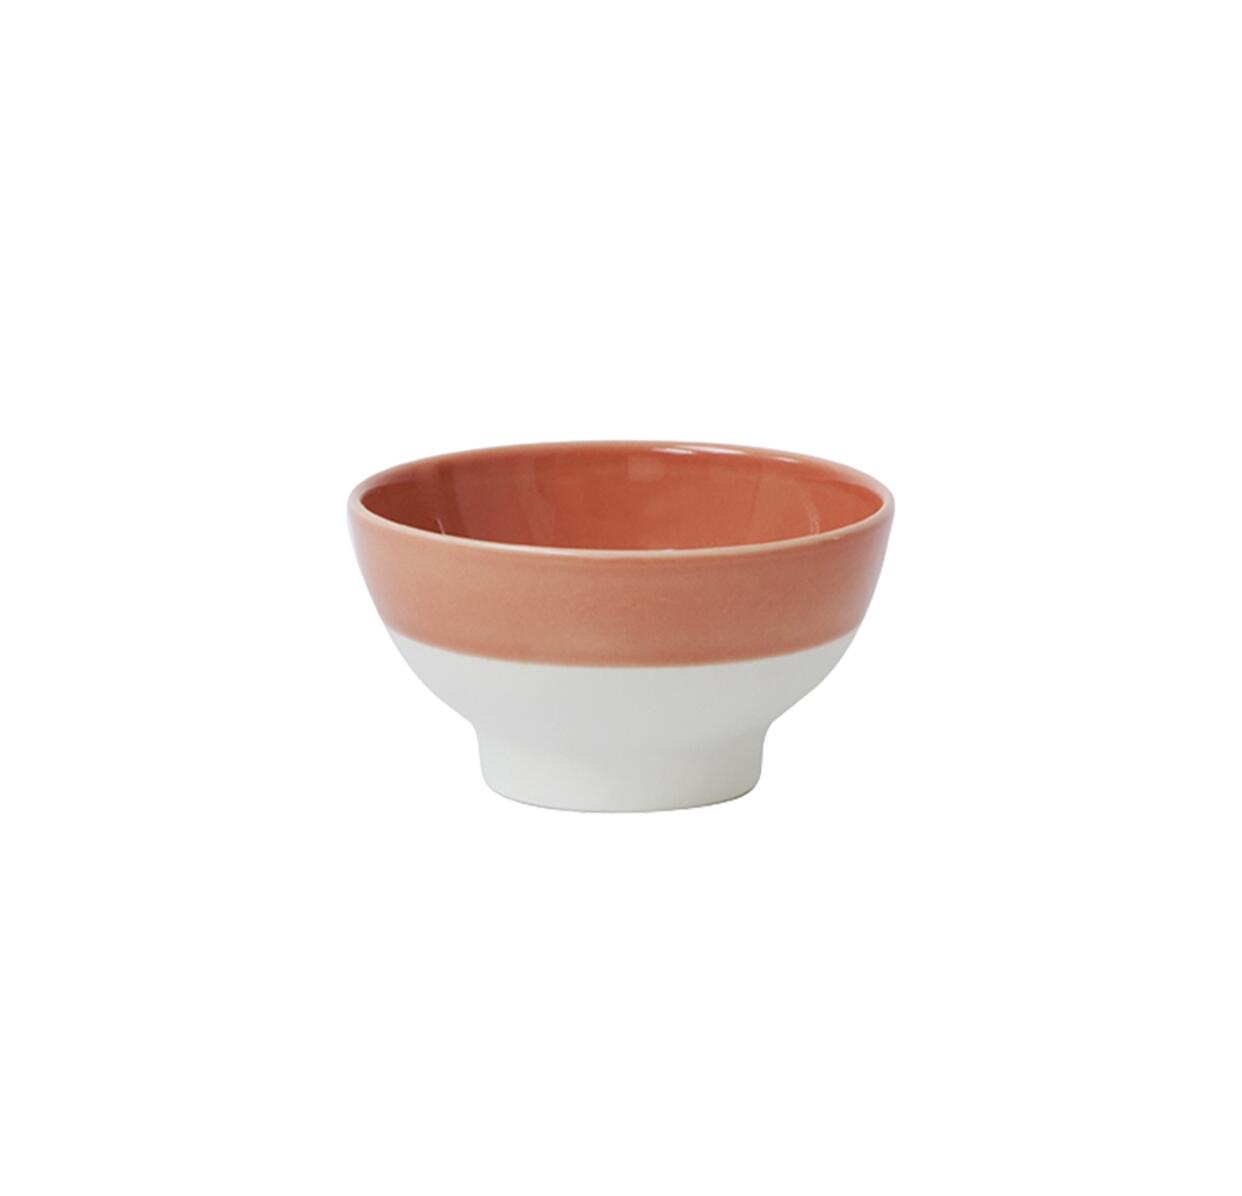 Mini bowl Cantine terre cuite, handmade ceramic tableware by Jars